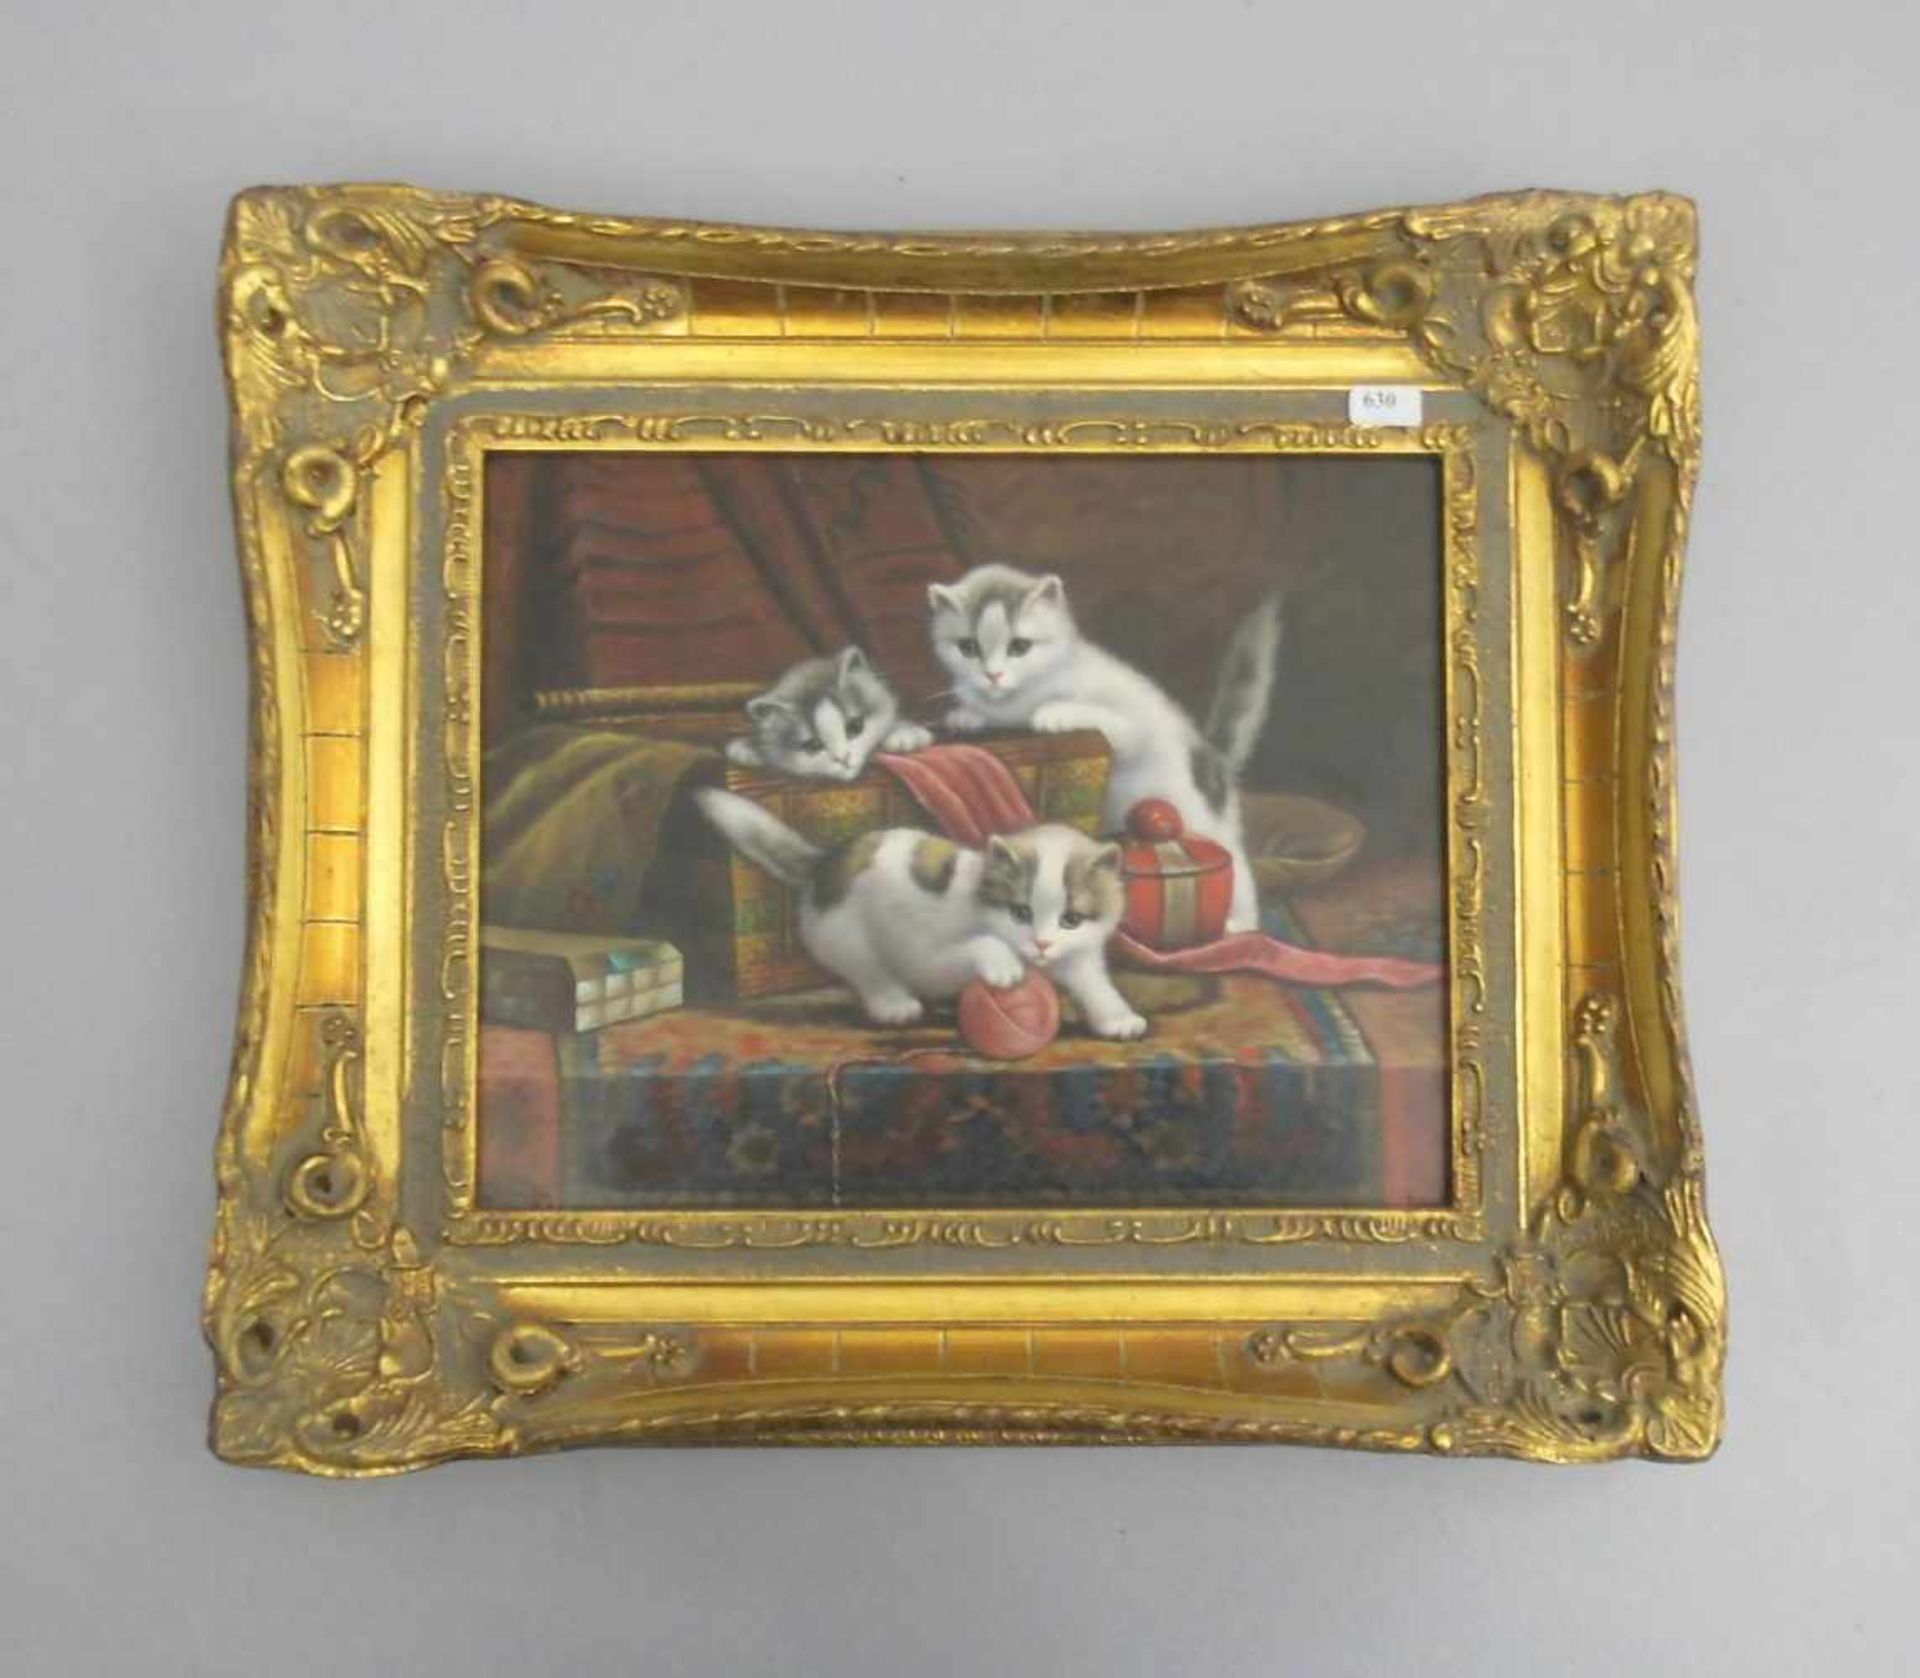 PETENY (20./21. Jh.), Gemälde / painting: "Stillleben mit spielenden Katzen", Öl auf Holz / oil on